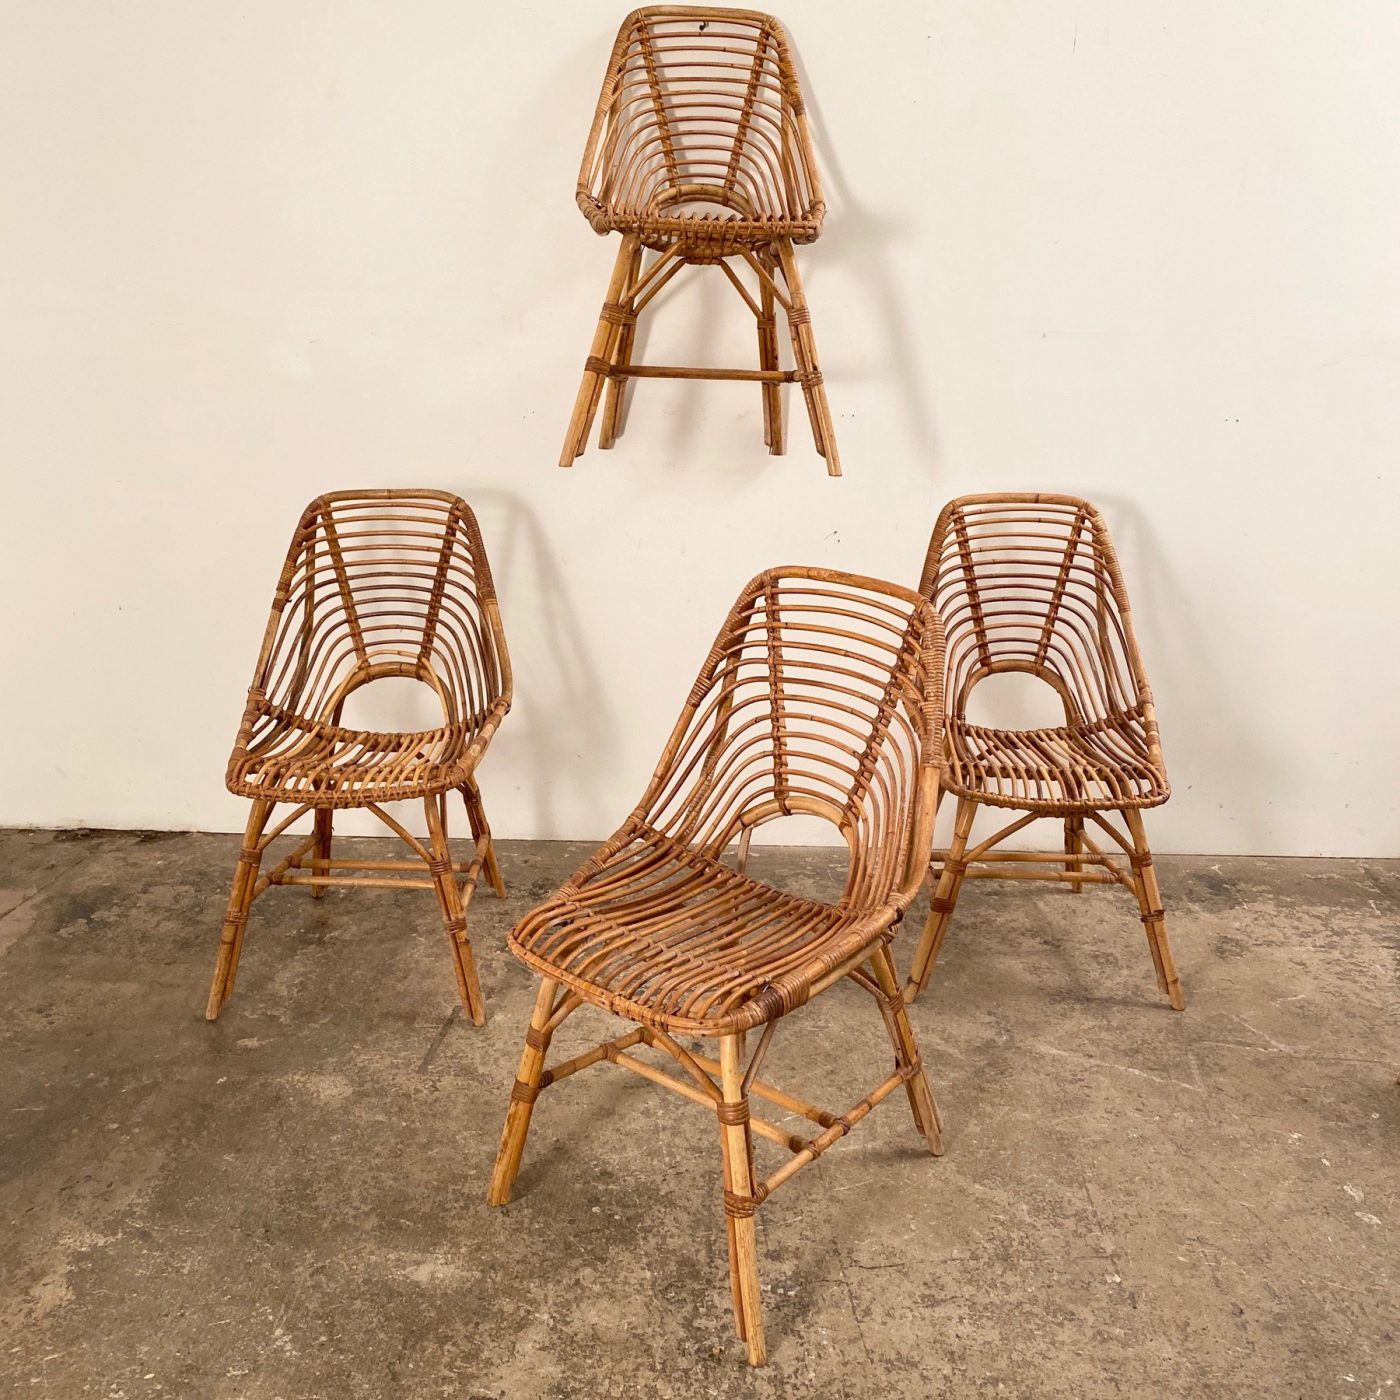 objet-vagabond-rattan-chairs0007